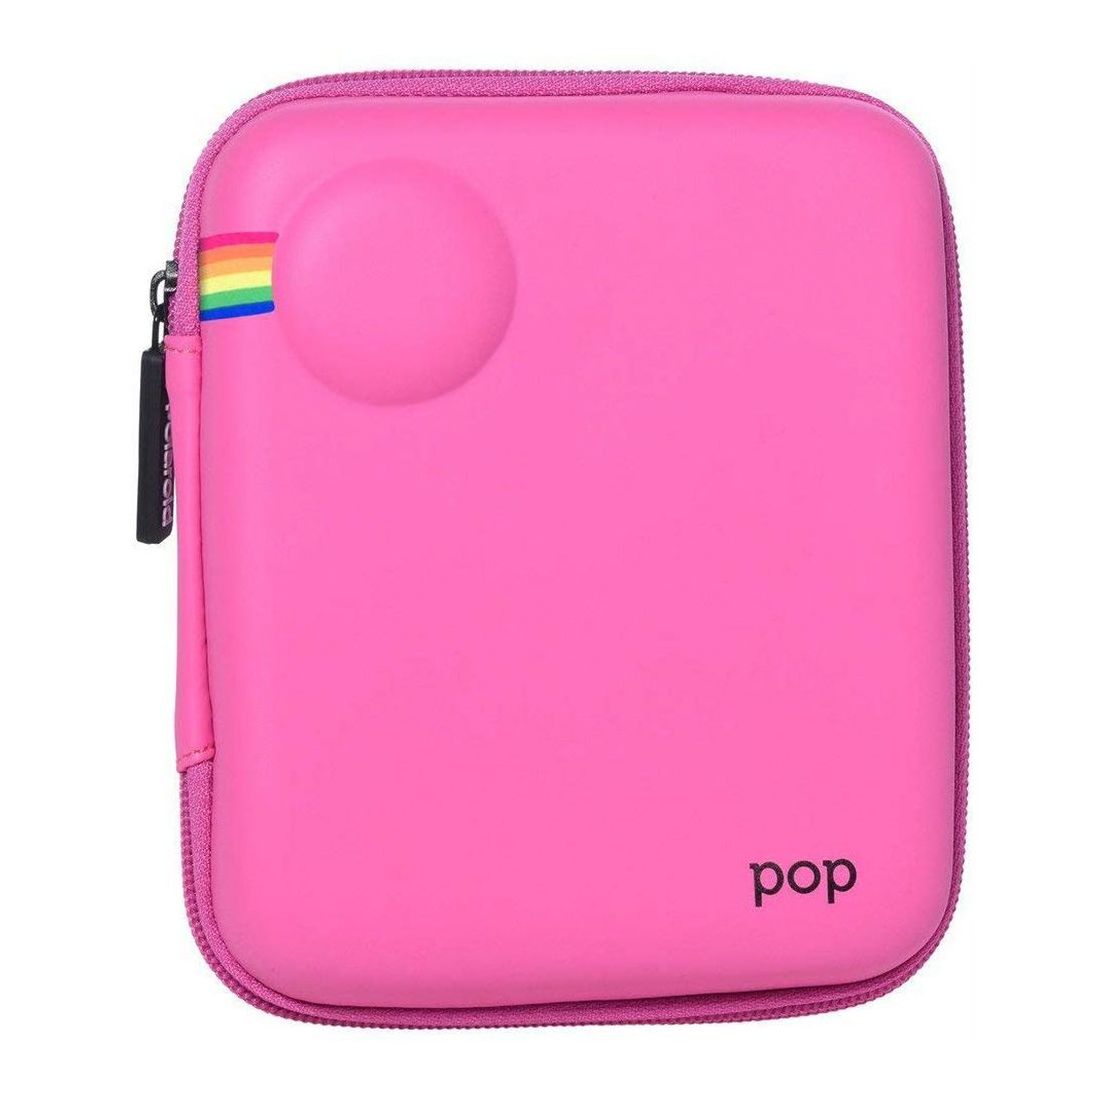 Polaroid Pop Instant Digital Camera Pink + Eva Case